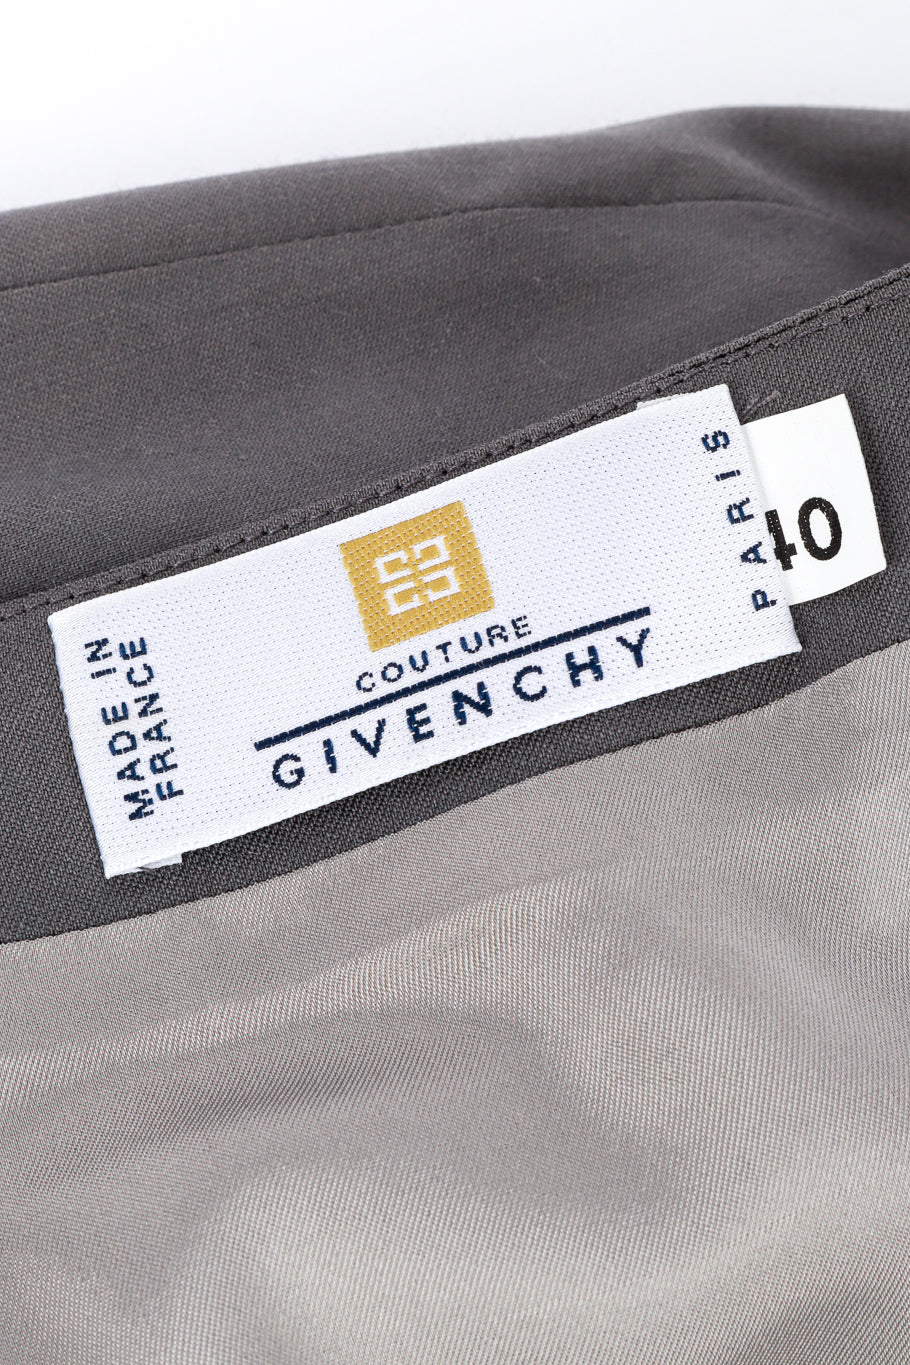 Vintage Givenchy 1999 F/W Circuit Board Zip Up Jacket & Skirt Set skirt signature label closeup @recess la